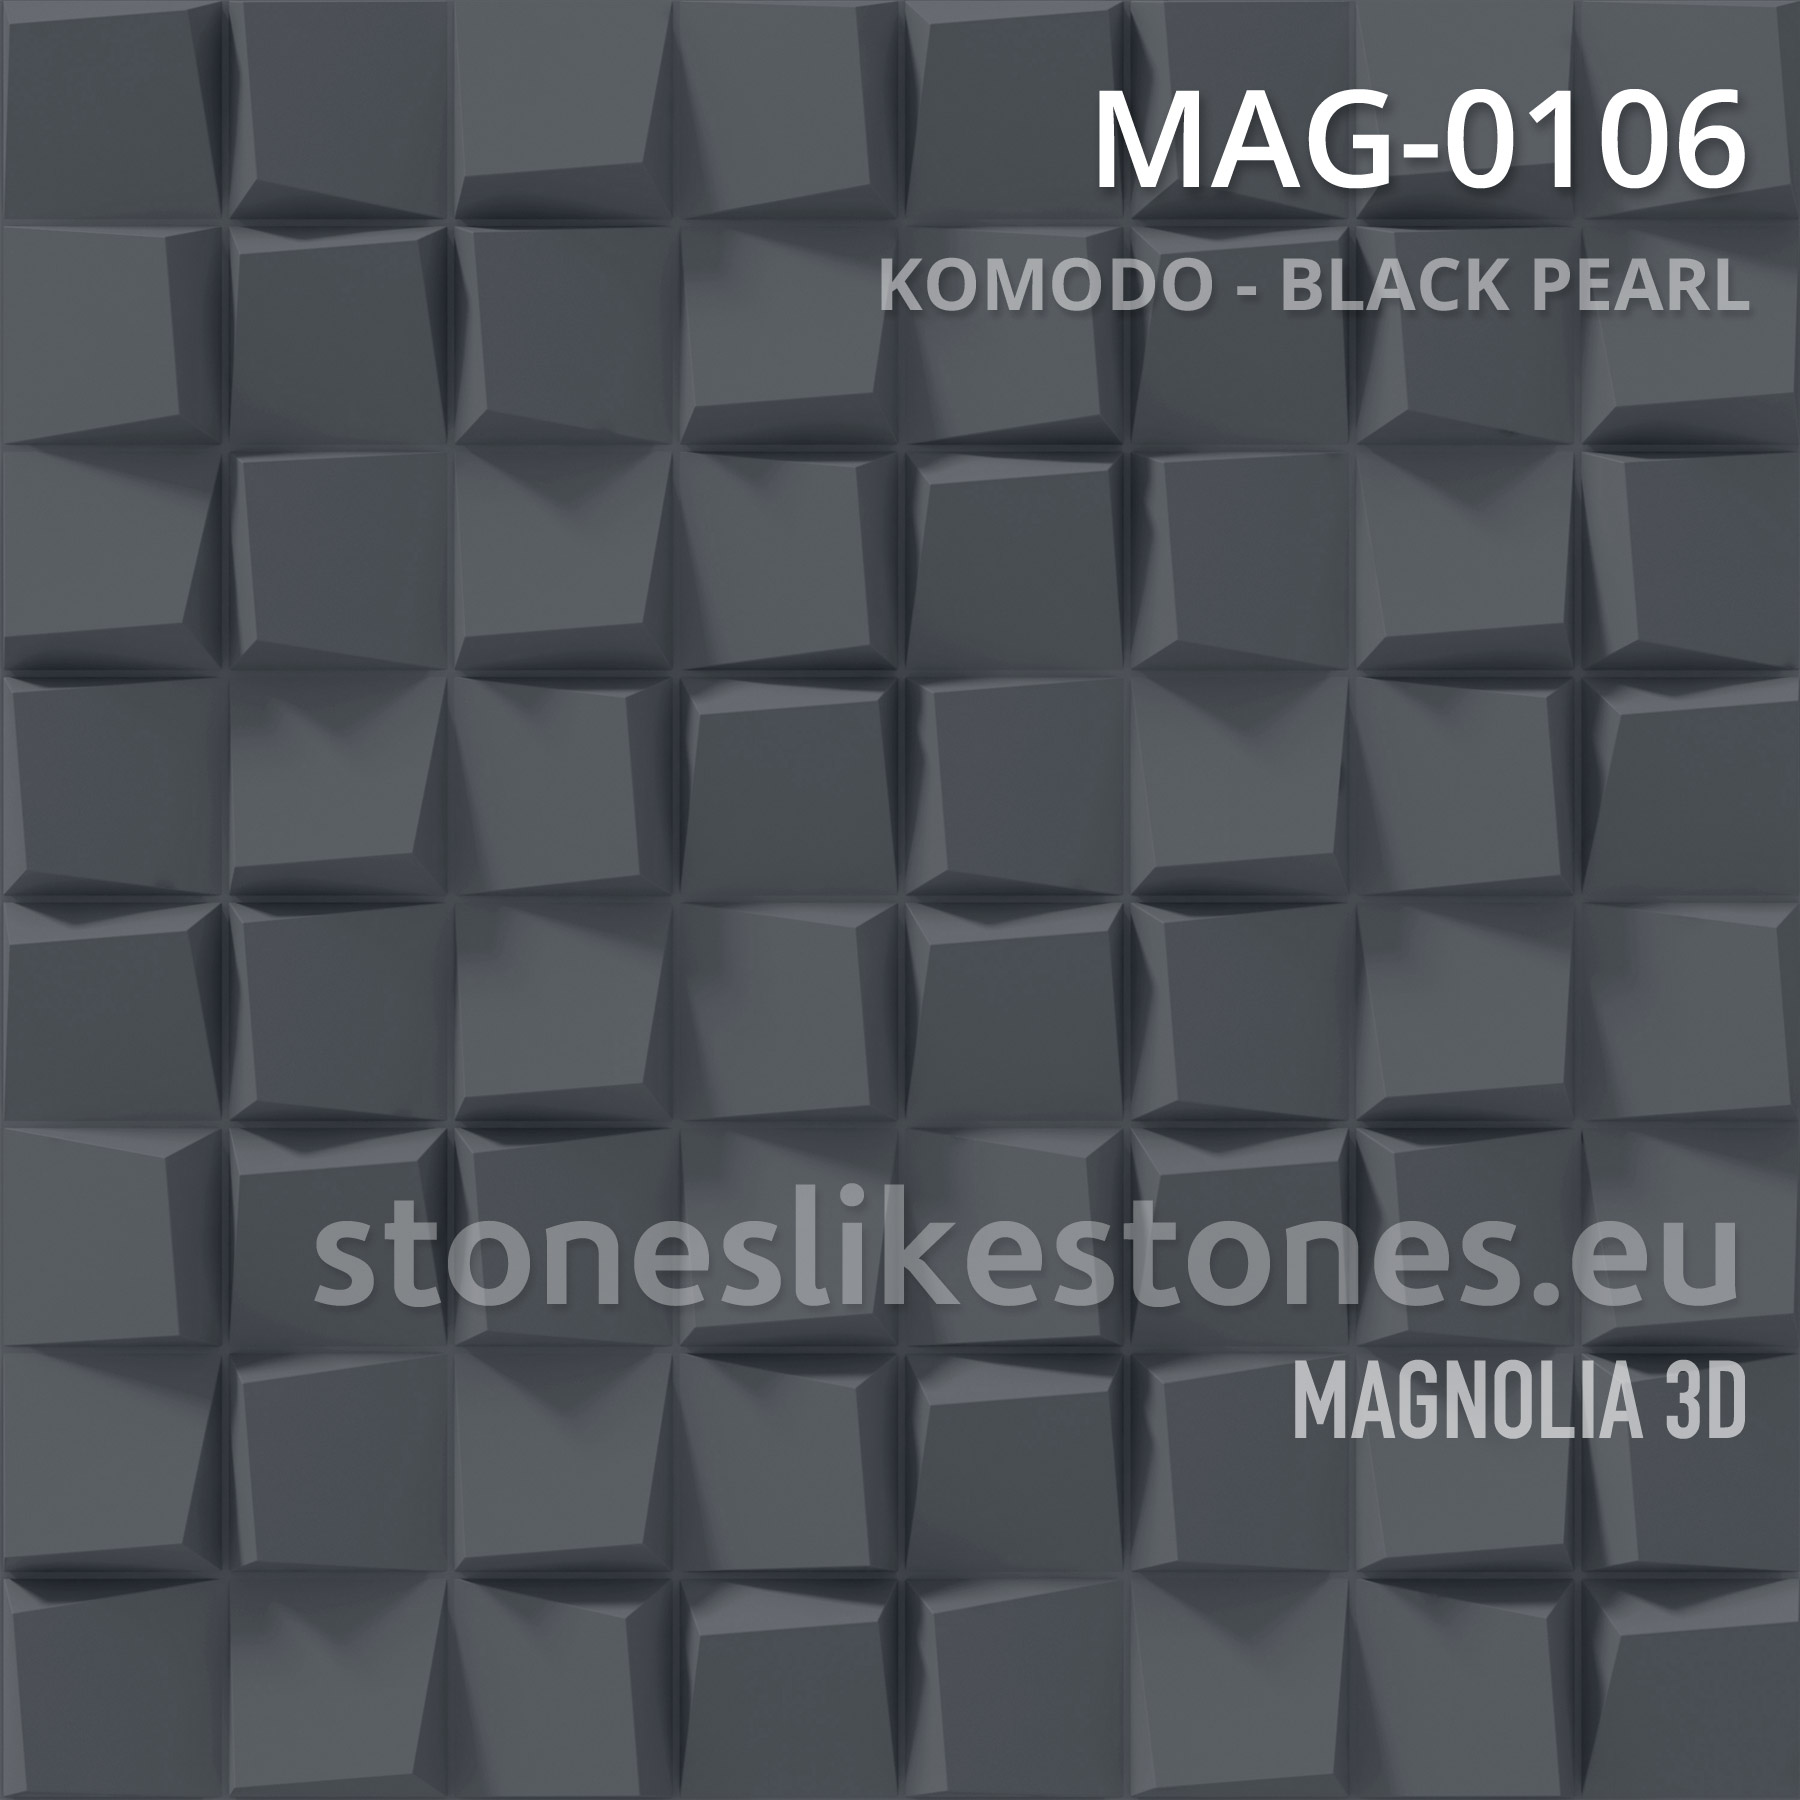 Magnolia 3D – MAG-0106 KOMODO – BLACK PEARL